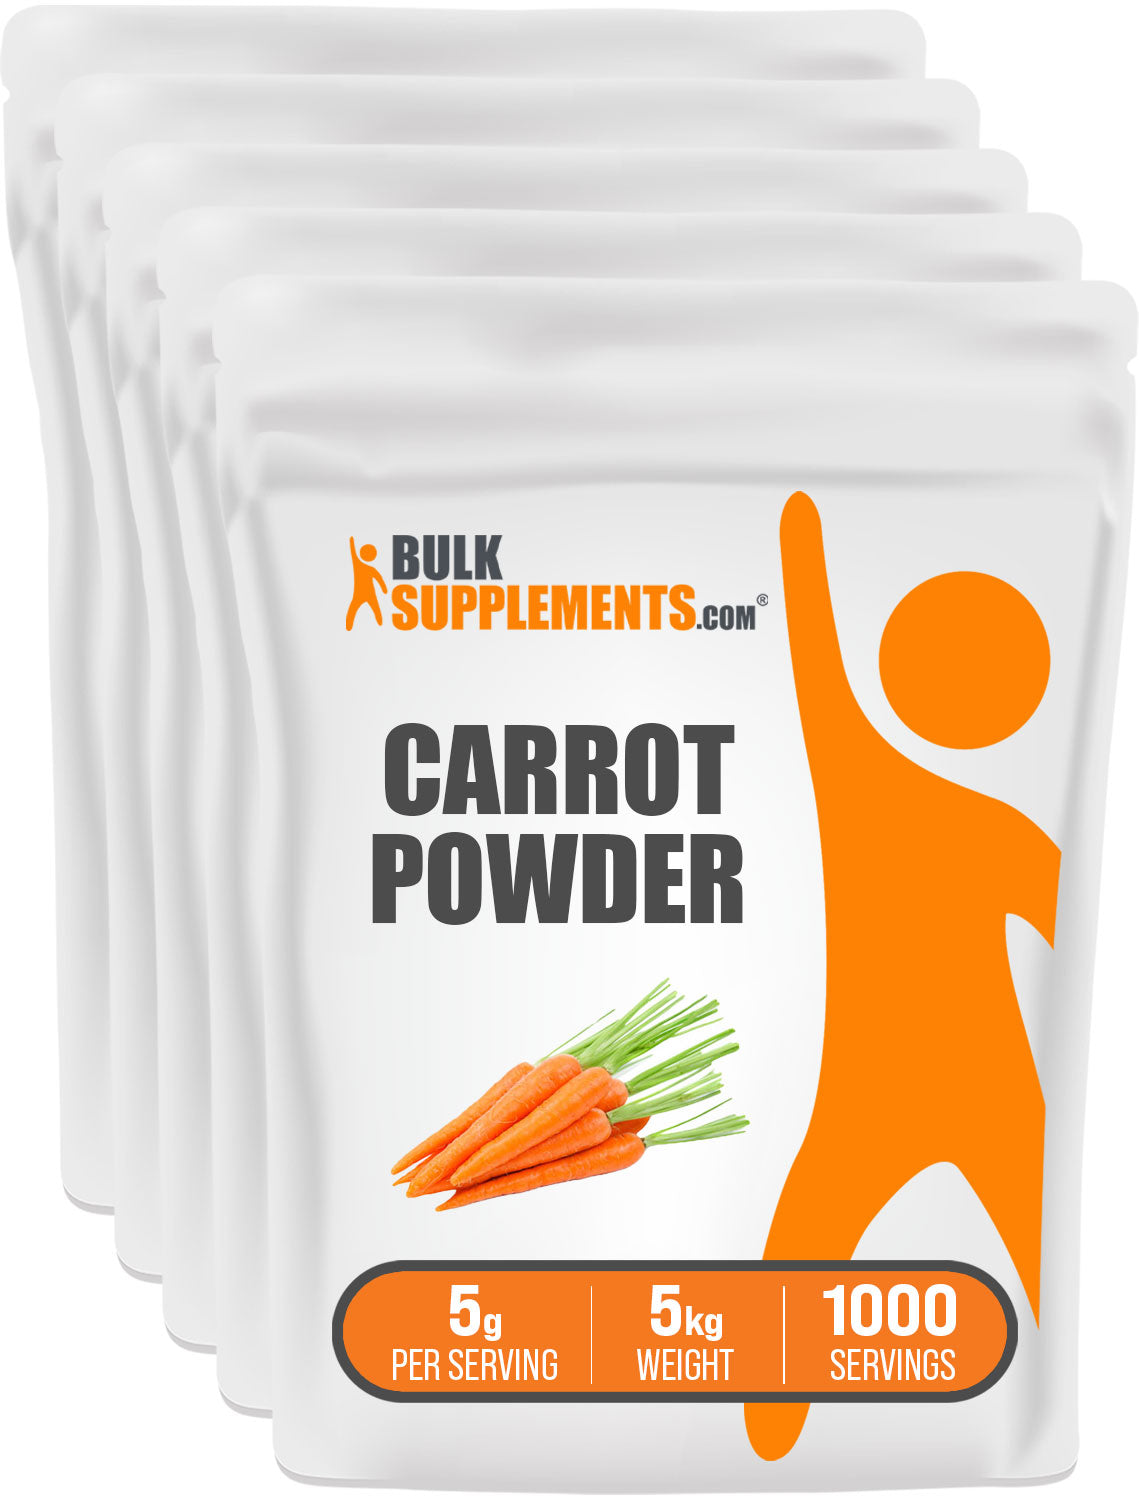 5kg of Carrot Powder